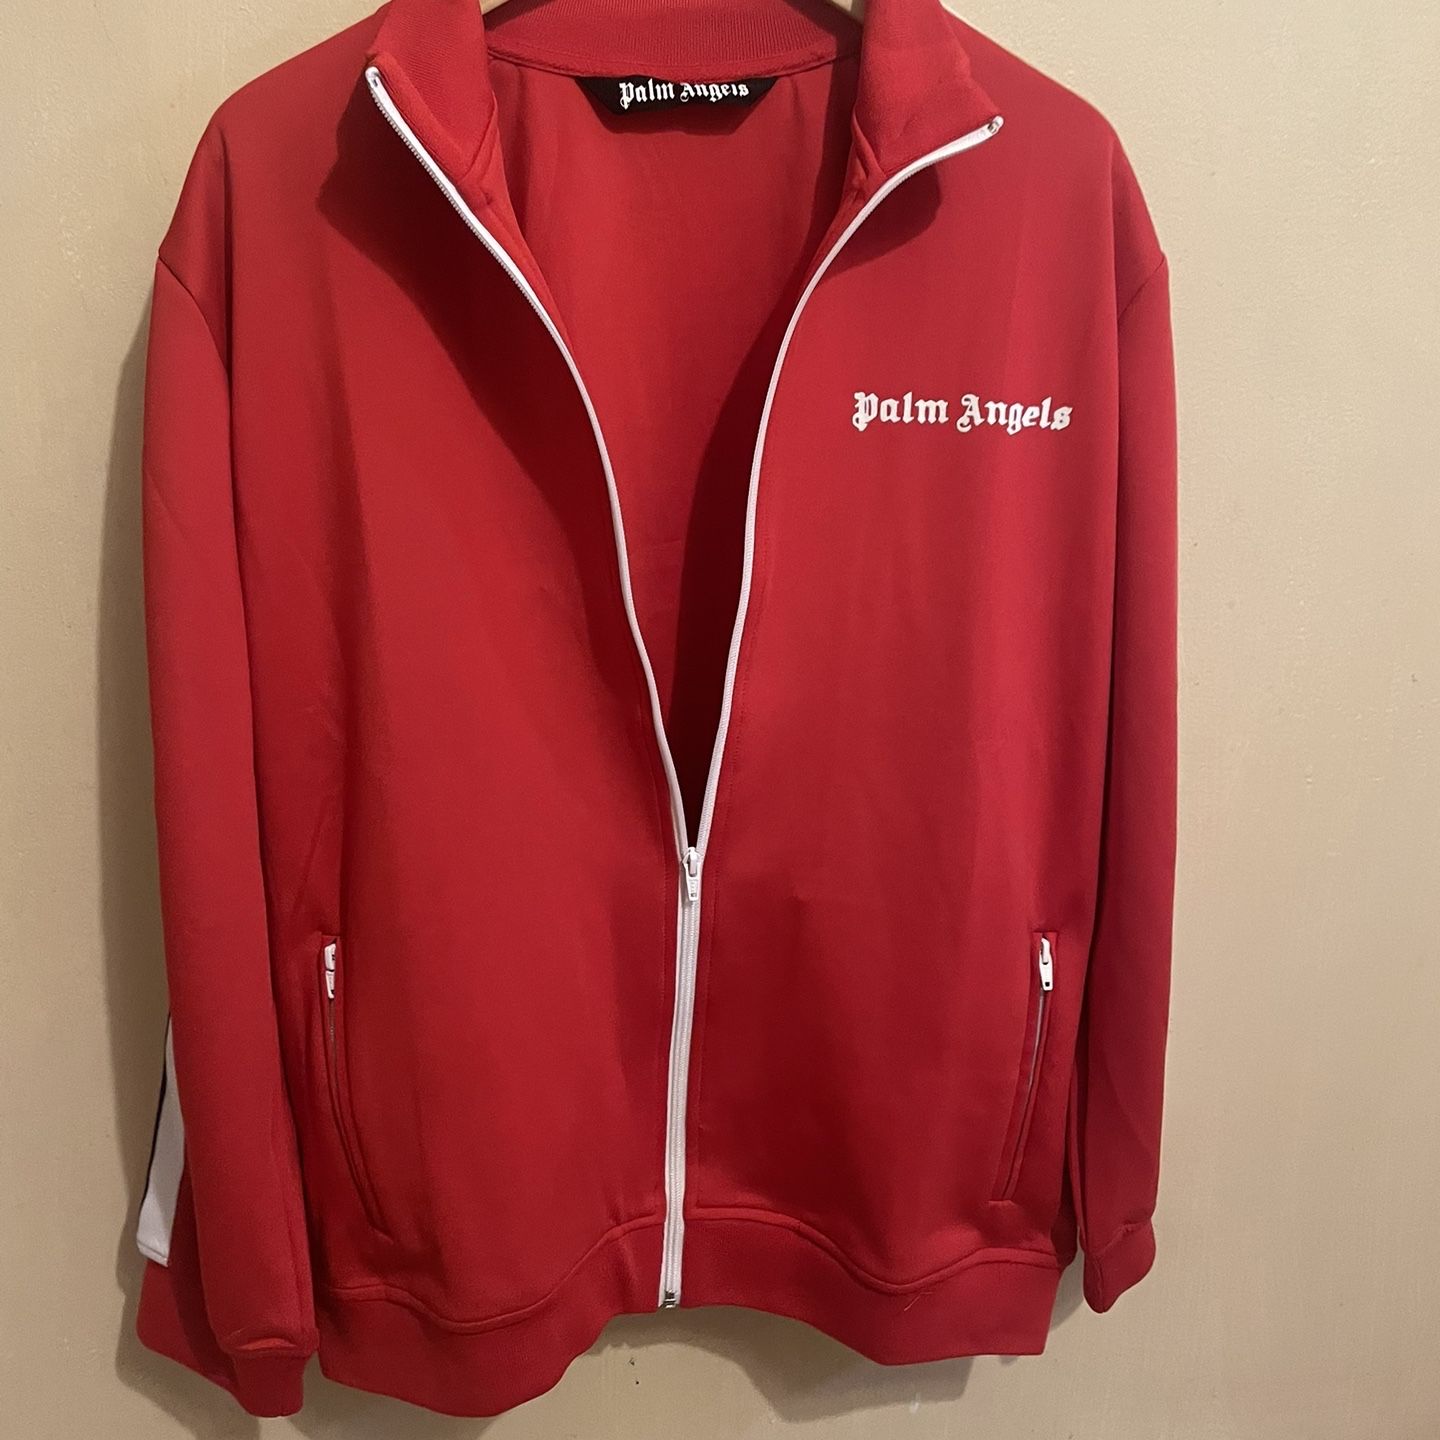 Red Palm Angel Jacket, Size XL